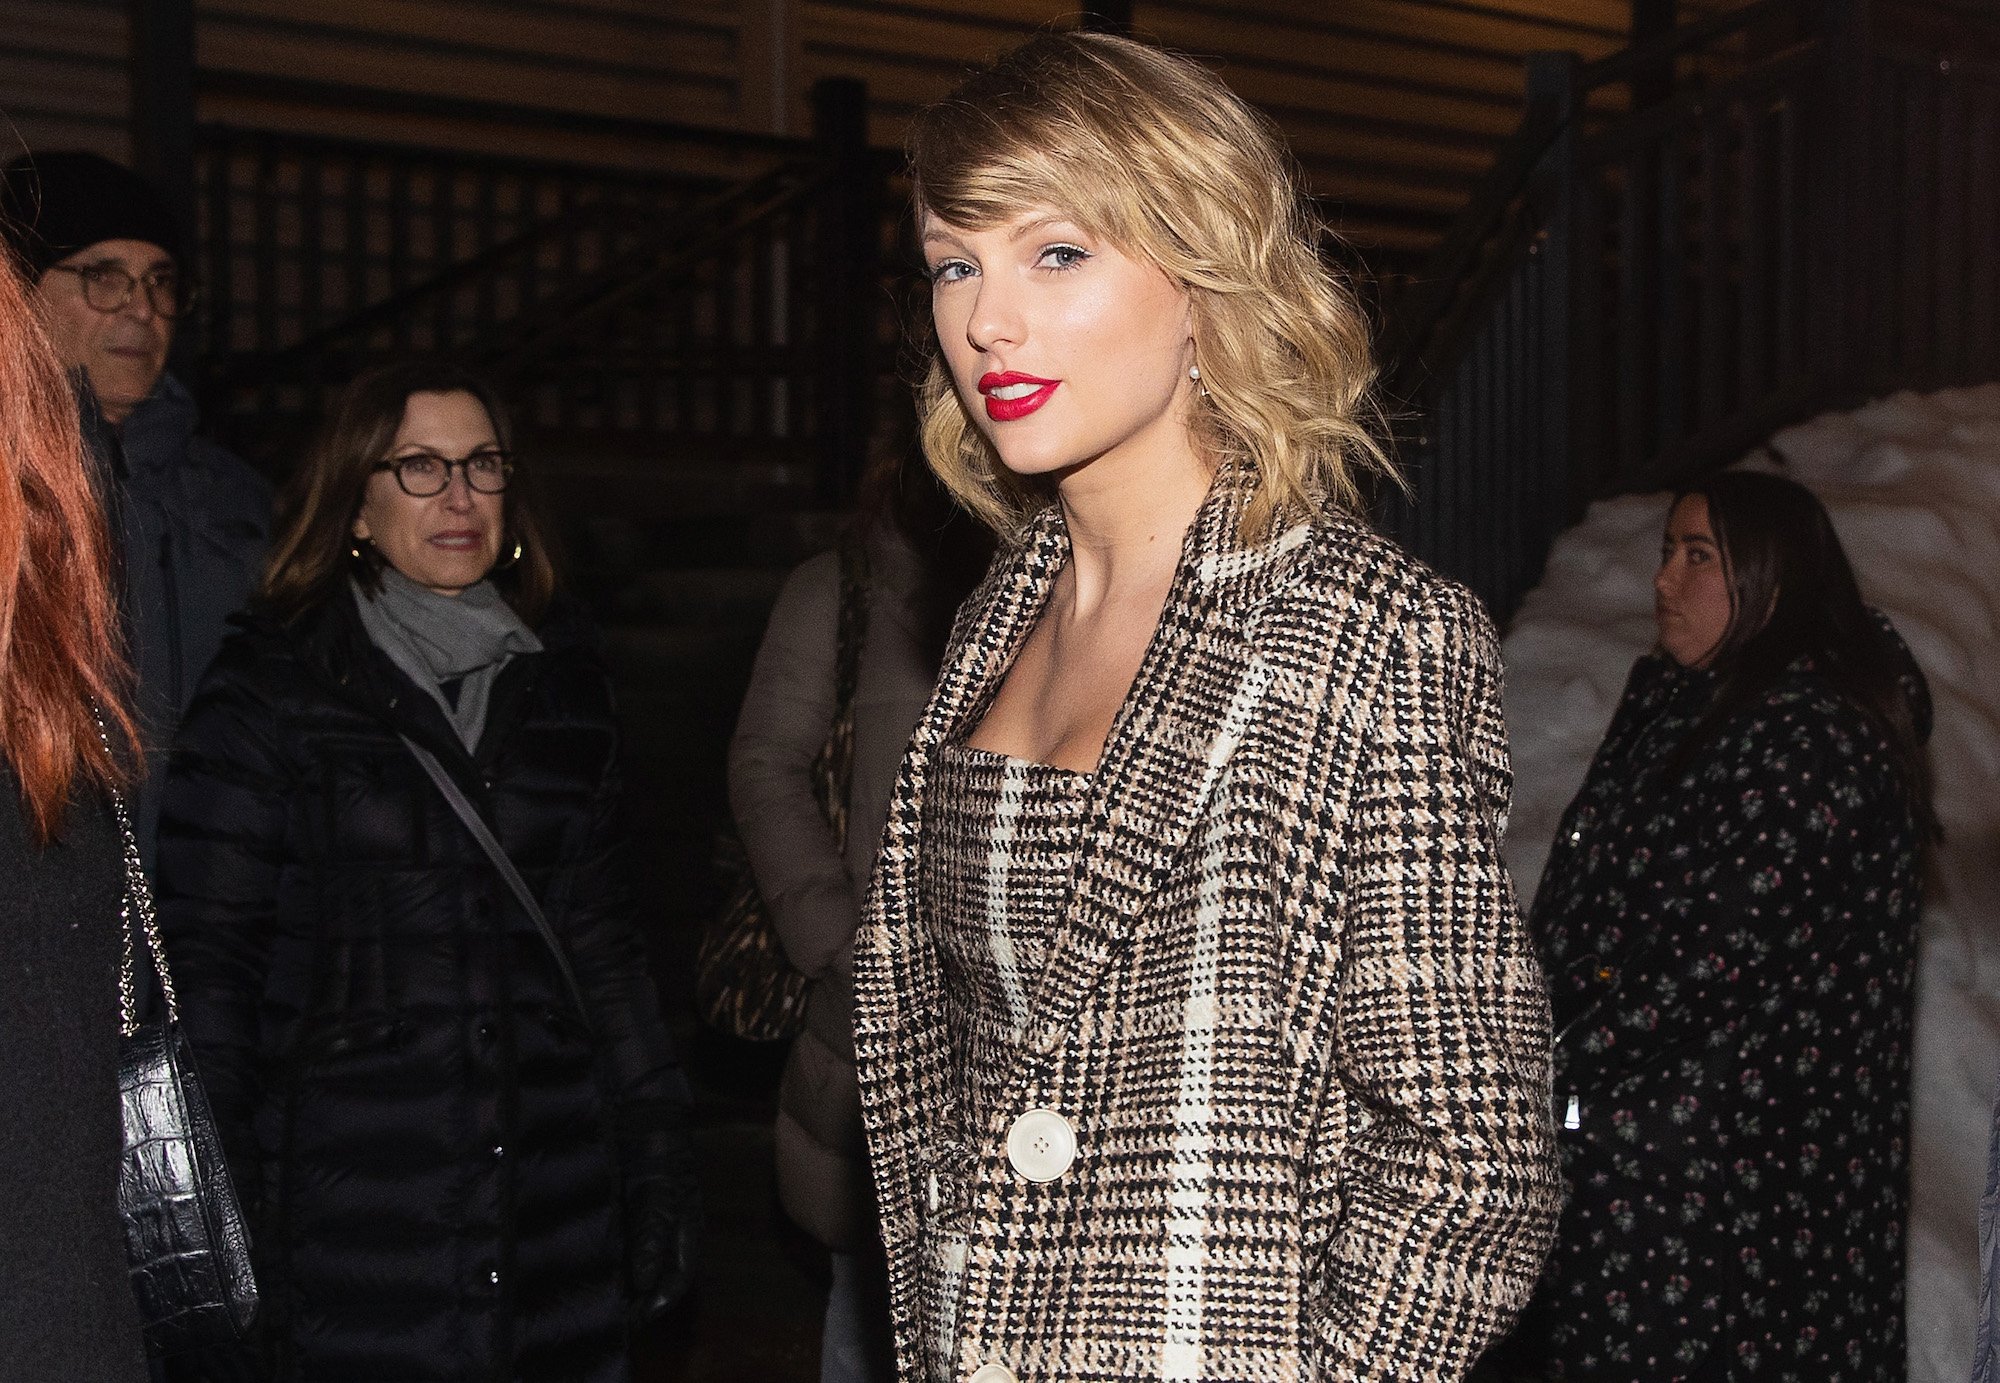 Taylor Swift during the Sundance Film Festival on January 23, 2020